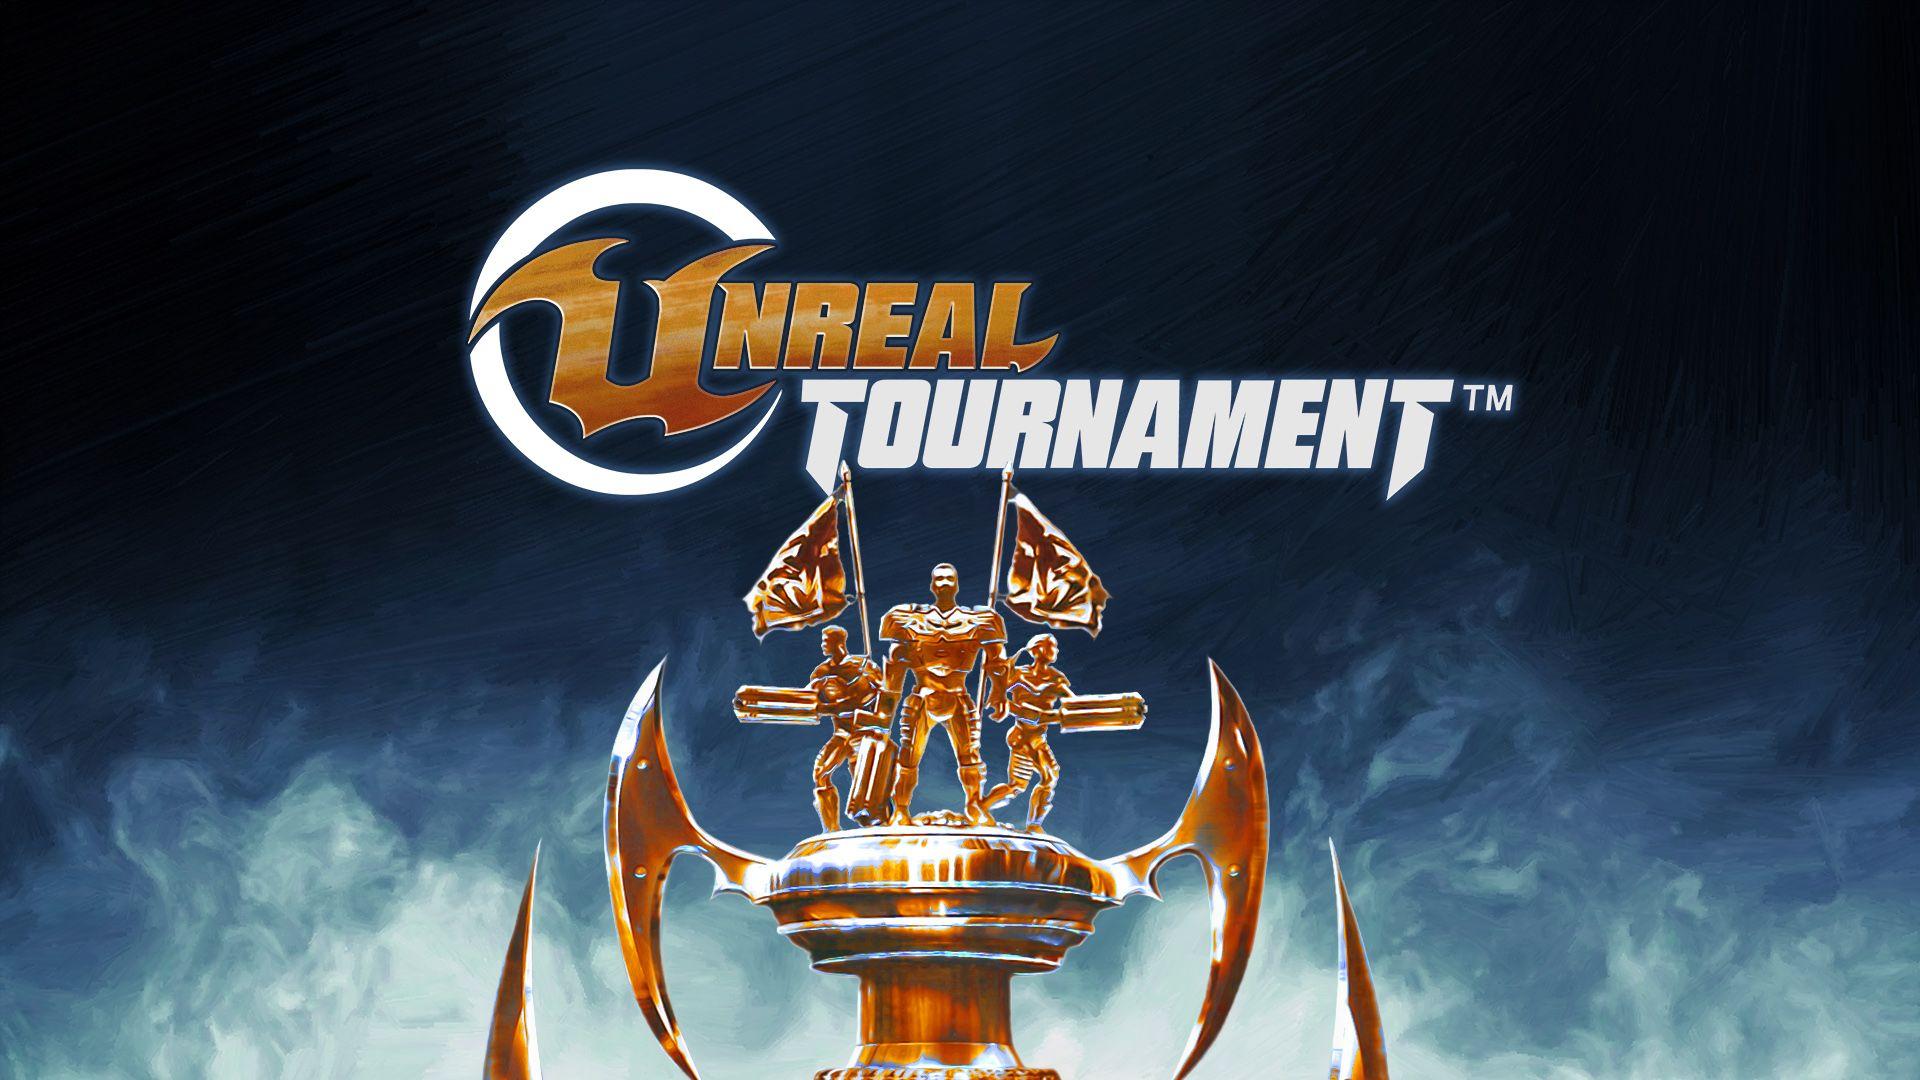 New official logo download & wallpaper Tournament